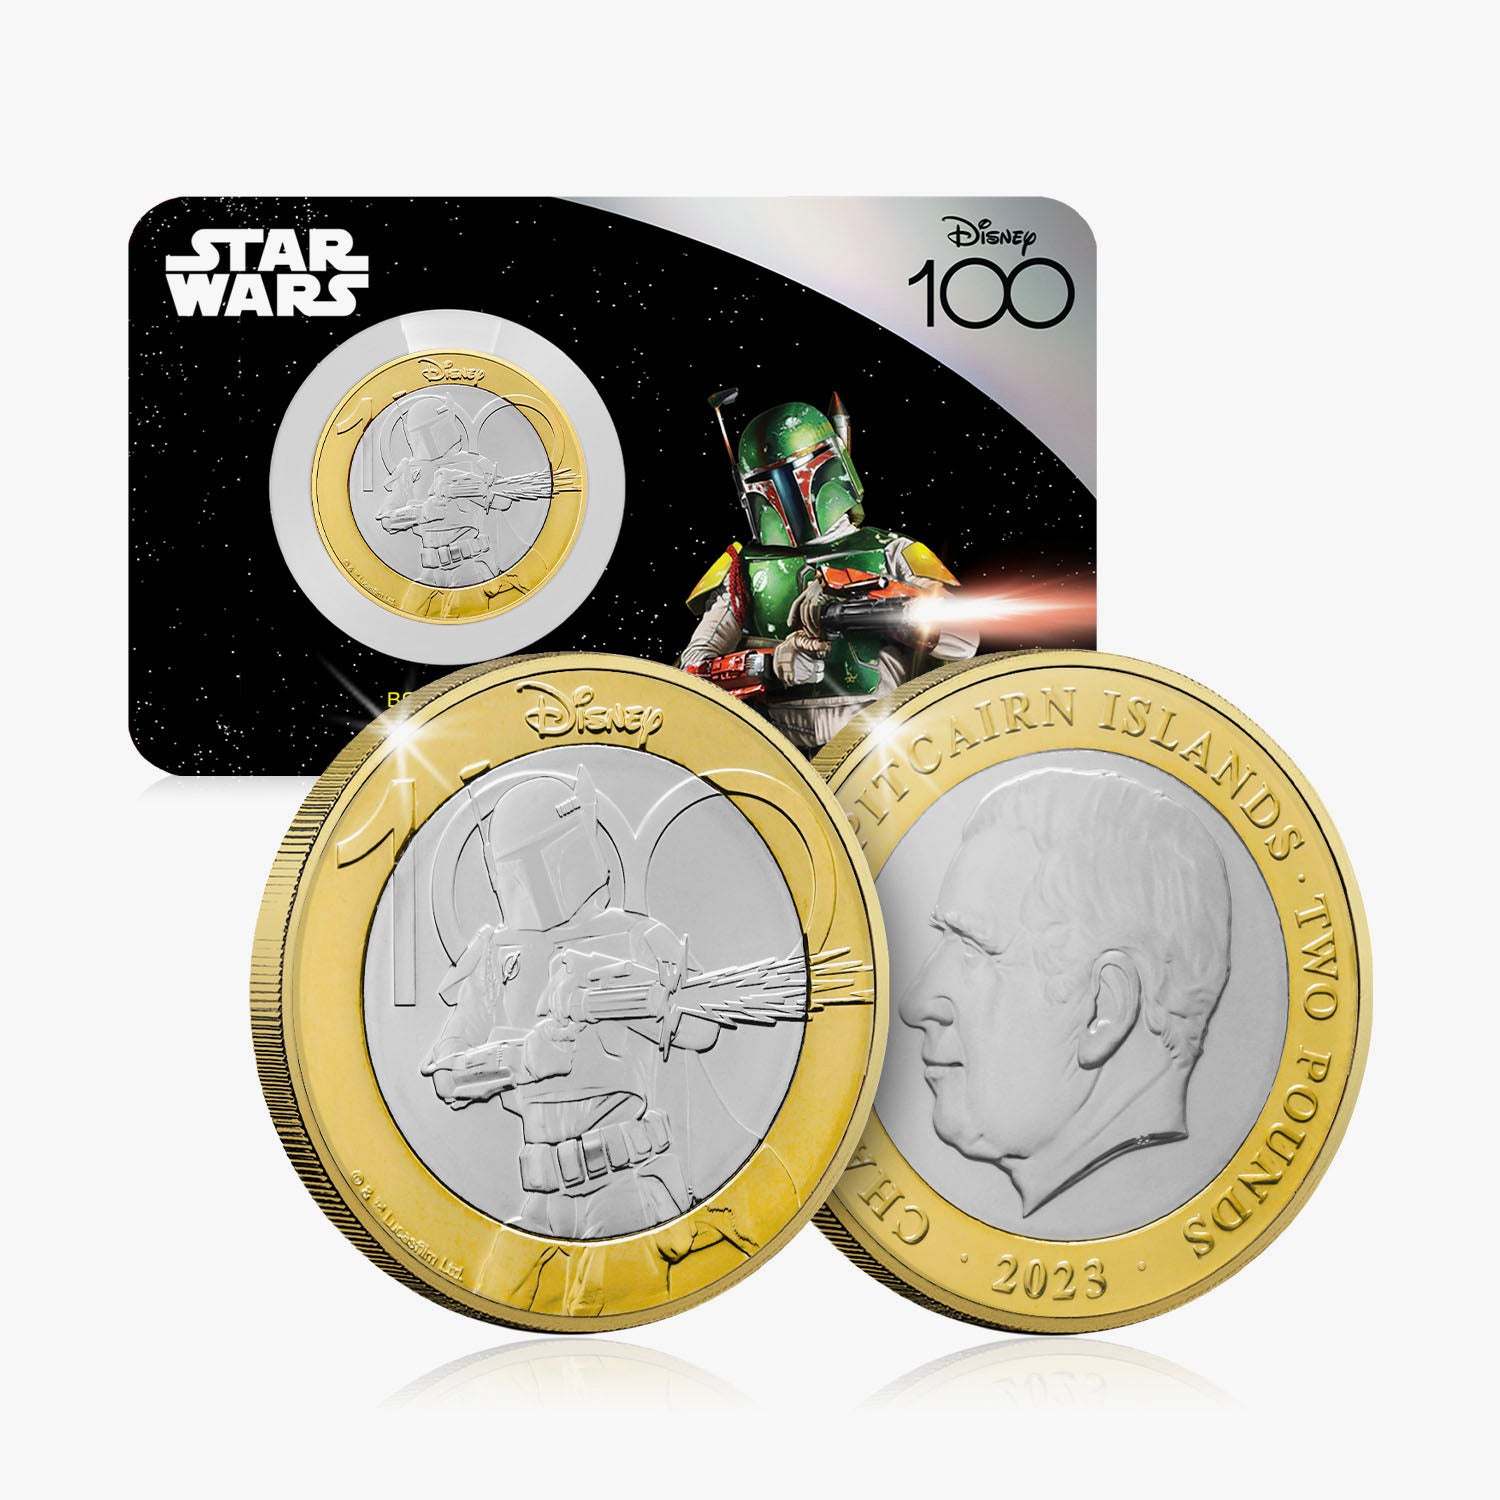 Star Wars Boba Fett 2023 £2 BU Coin